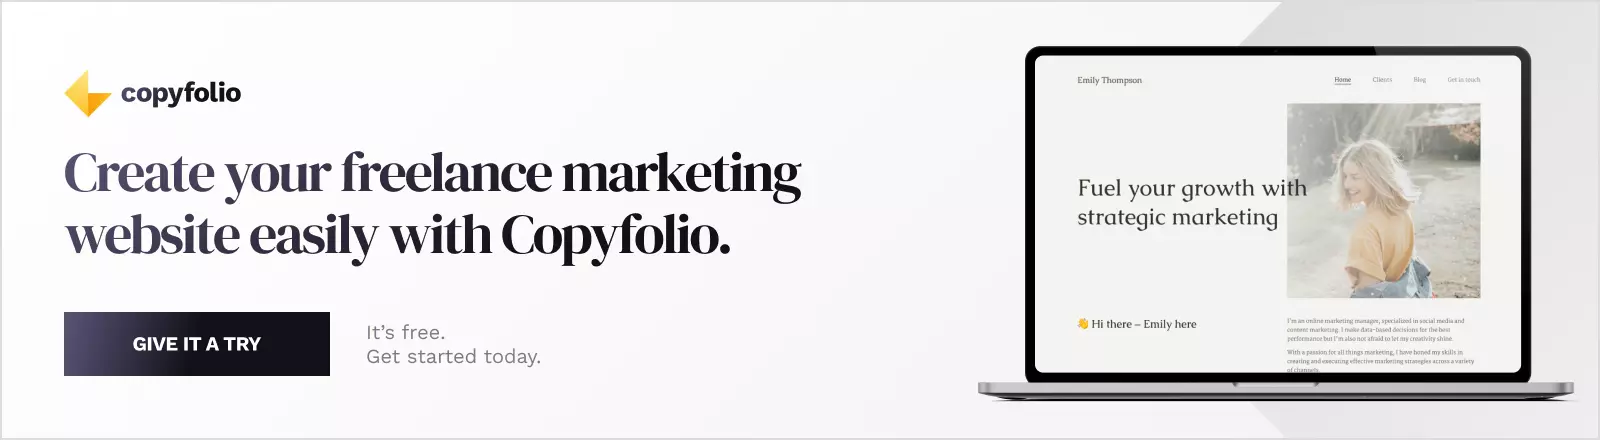 Create your freelance marketing website easily with Copyfolio